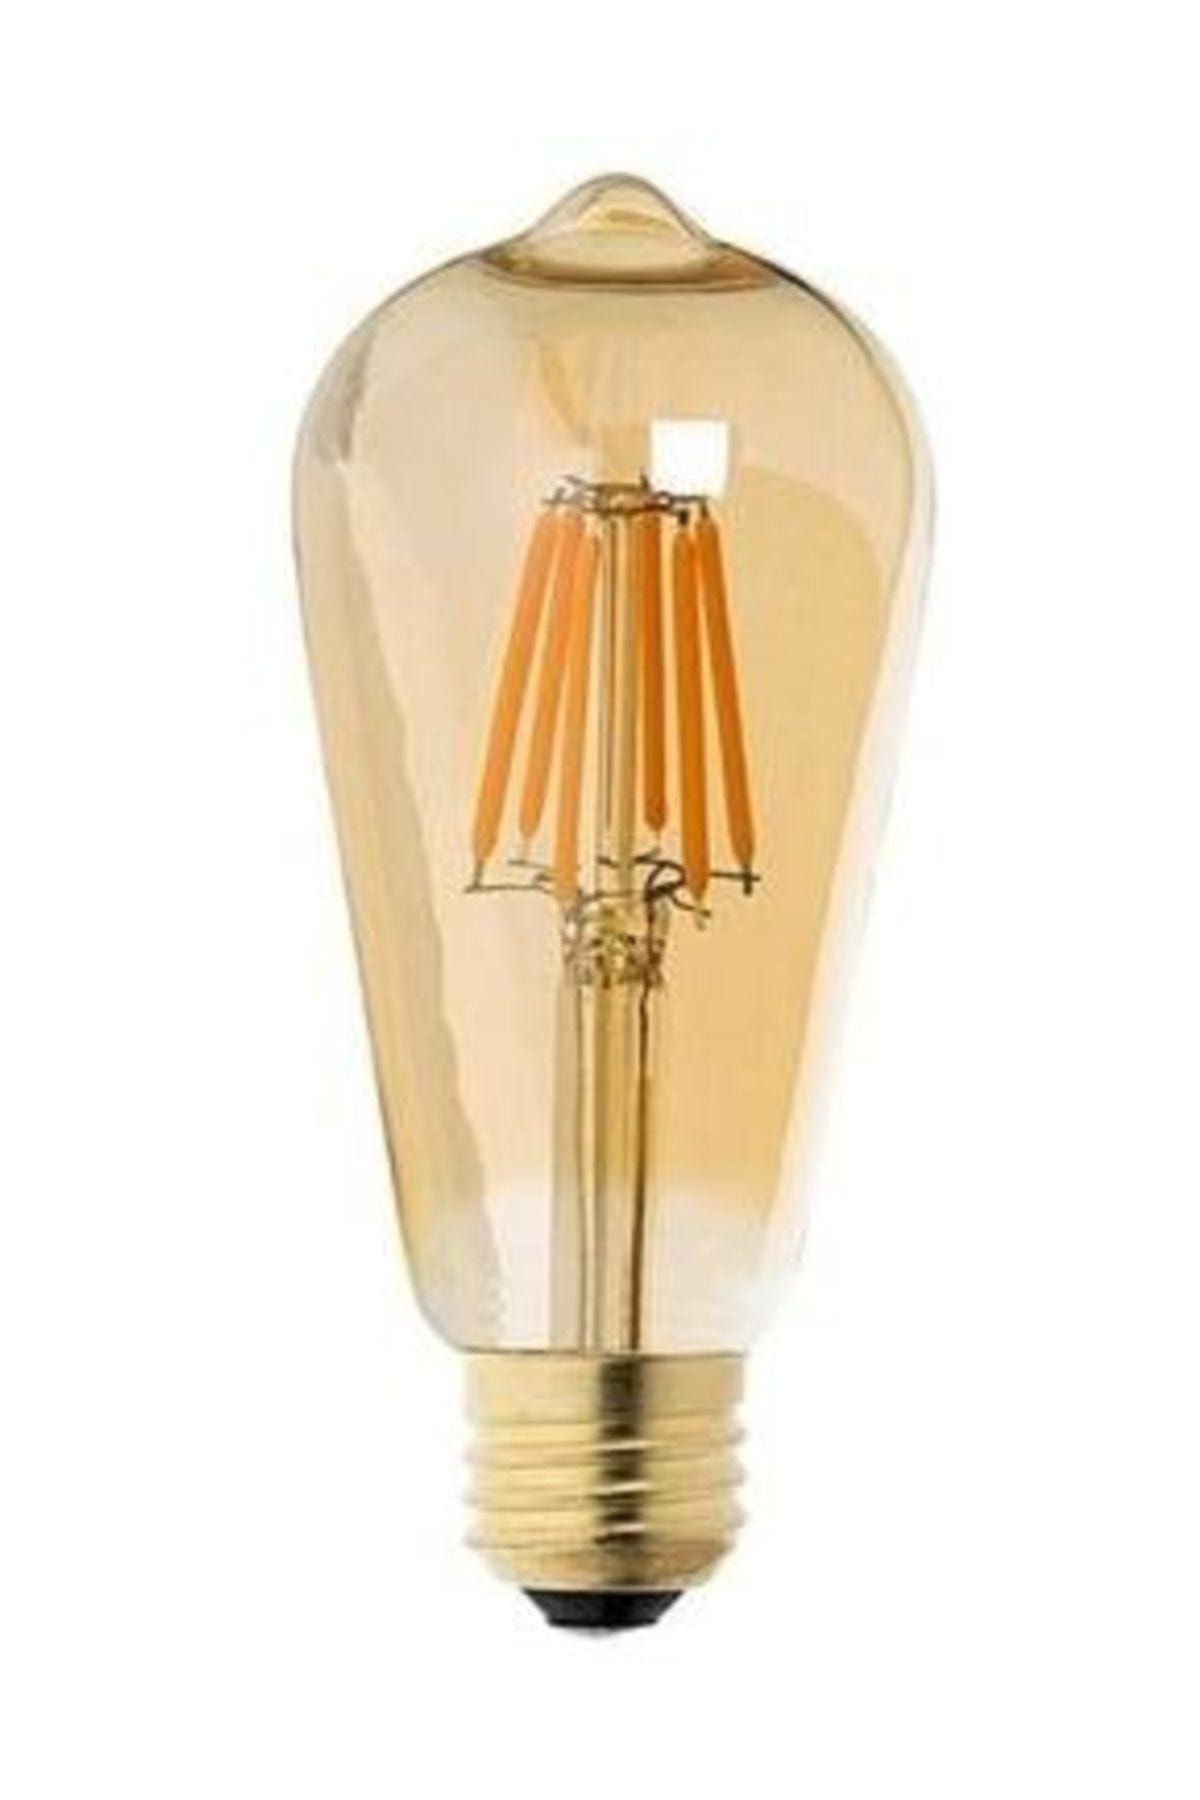 4 Watt Rustic Led Bulb Erd-31 Amber Color